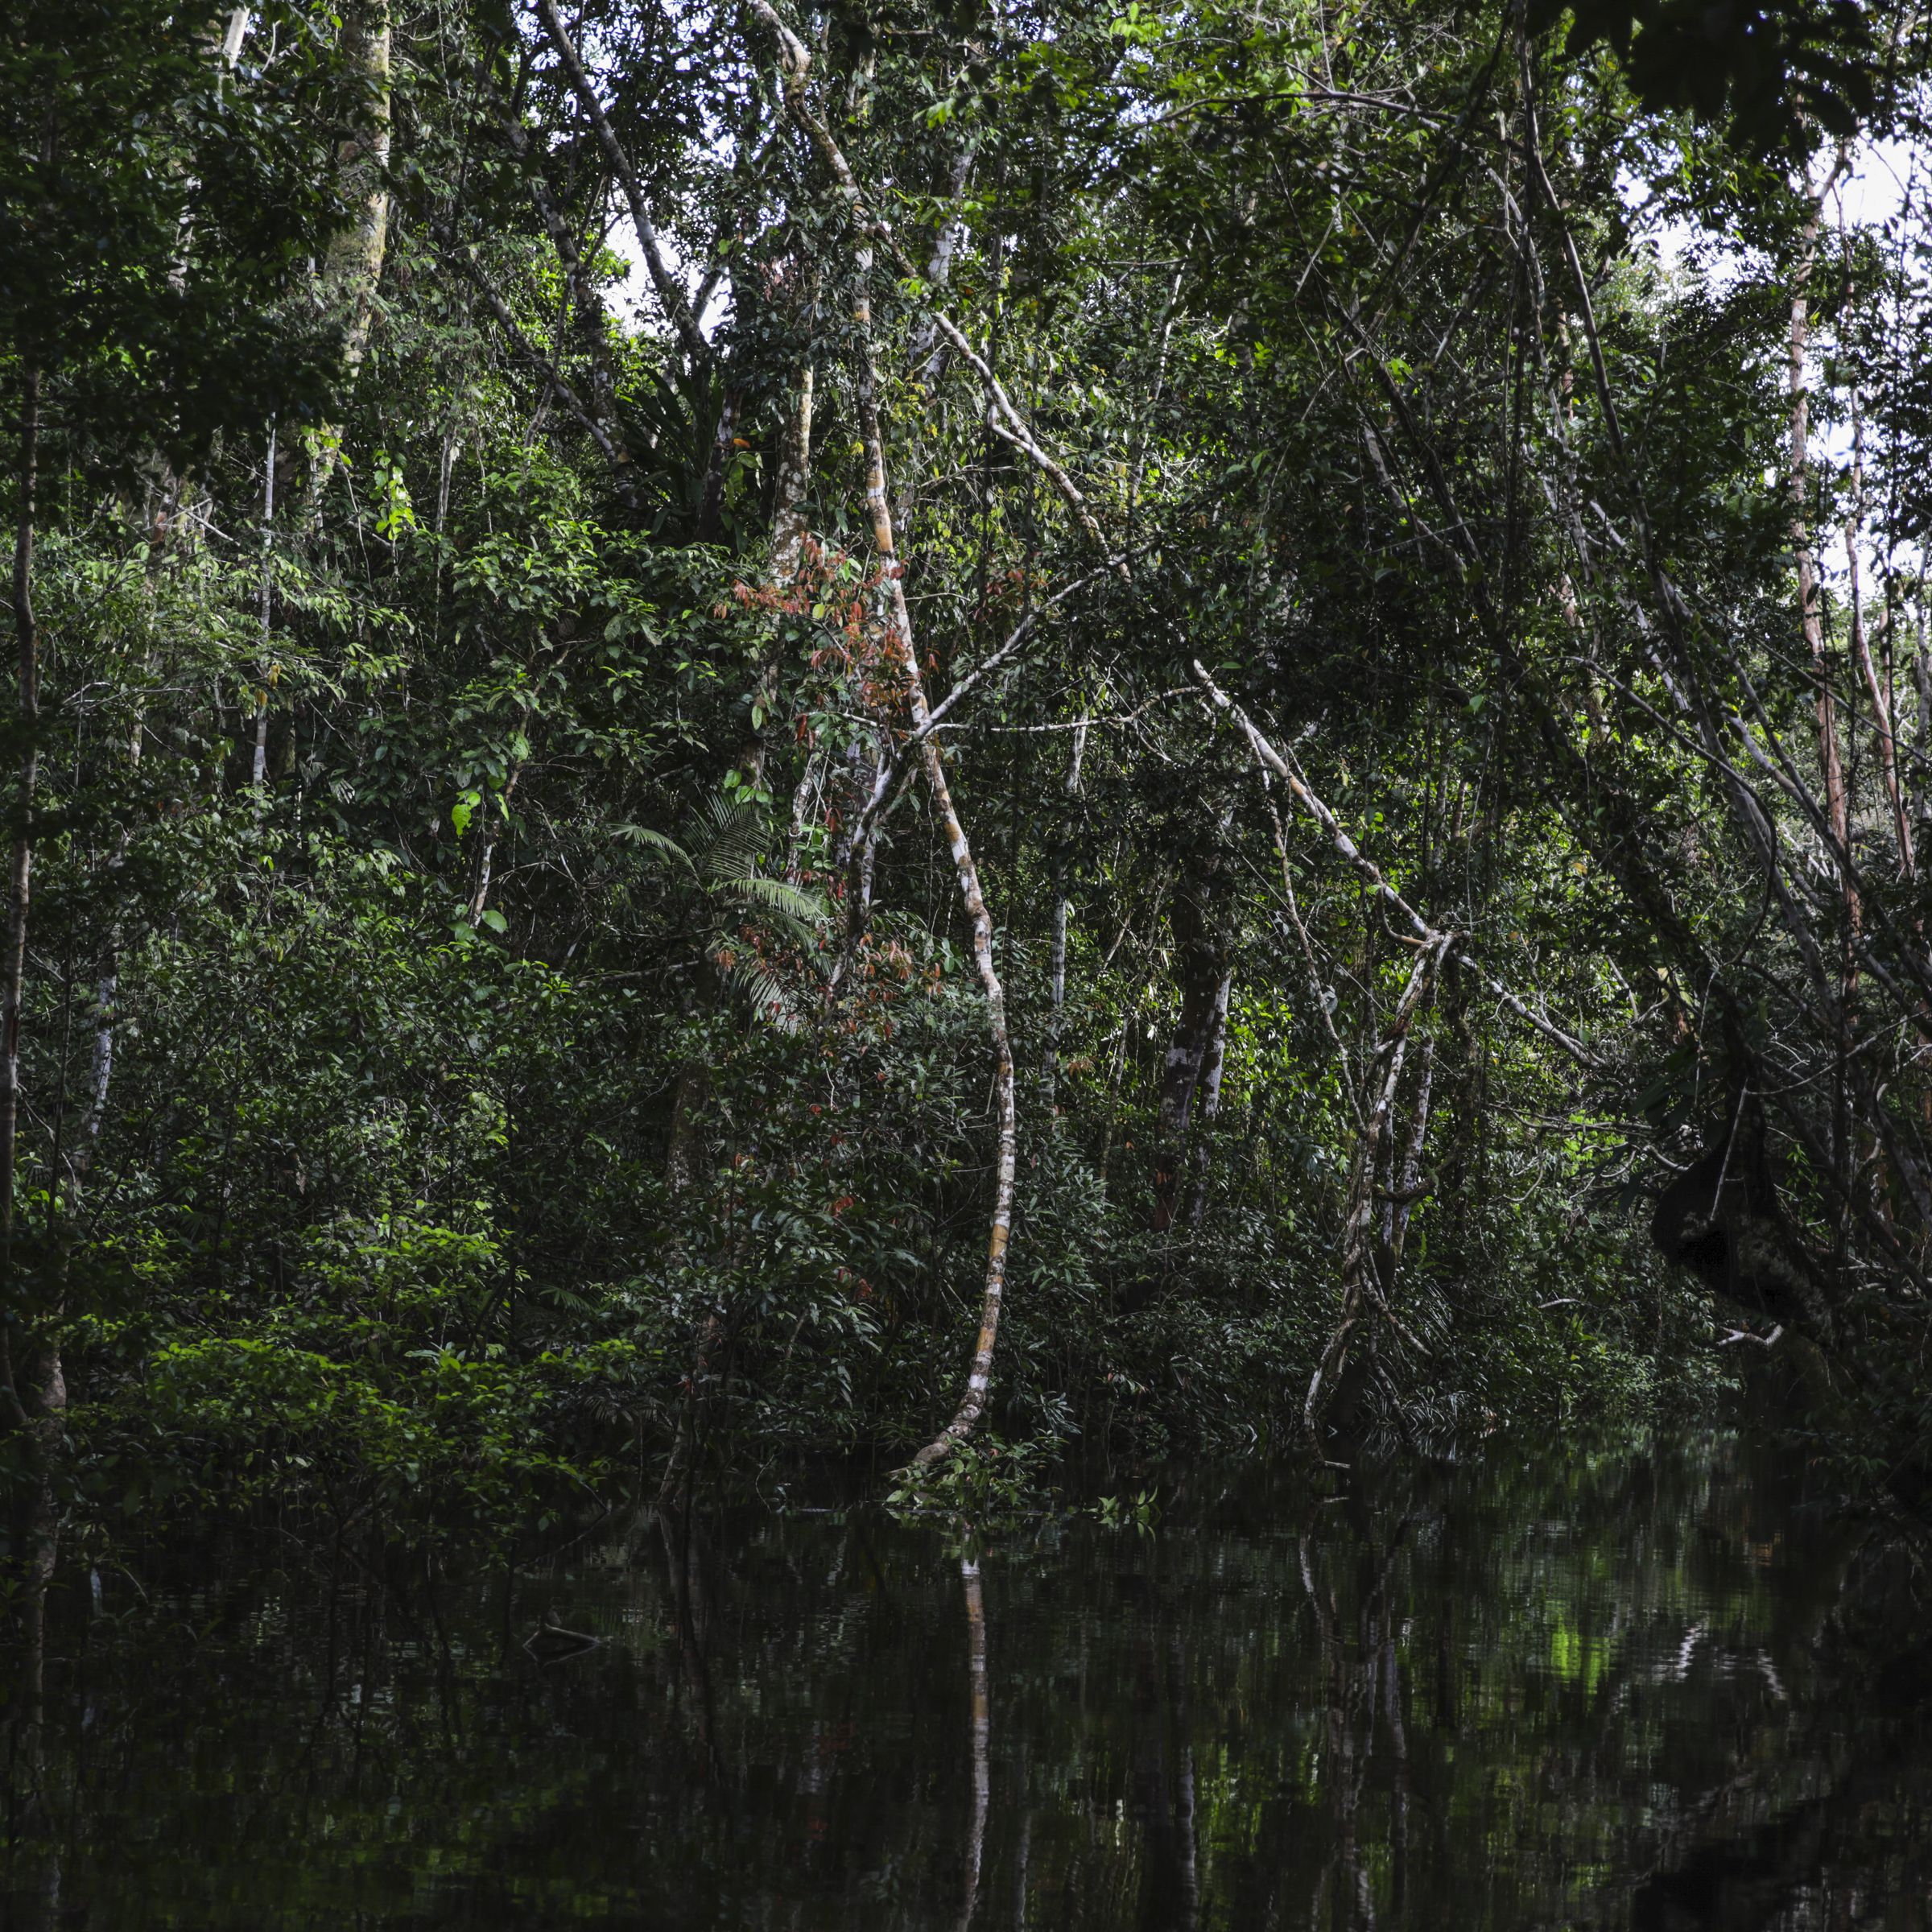 Amazon rainforest in Colombia